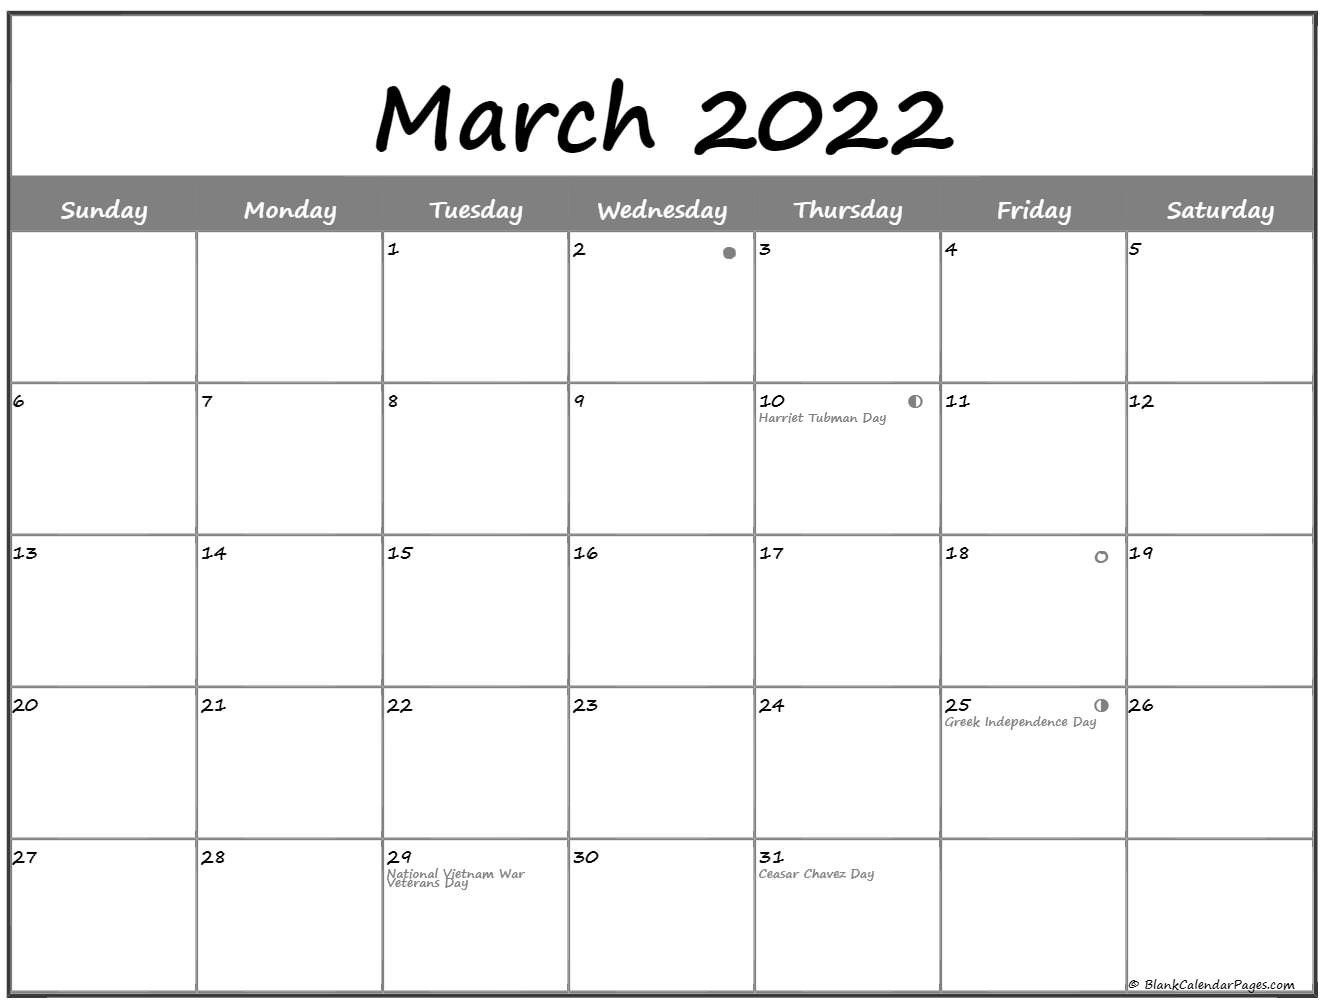 March 2022 Lunar Calendar | Moon Phase Calendar  Lunar Calendar 2022 Time And Date